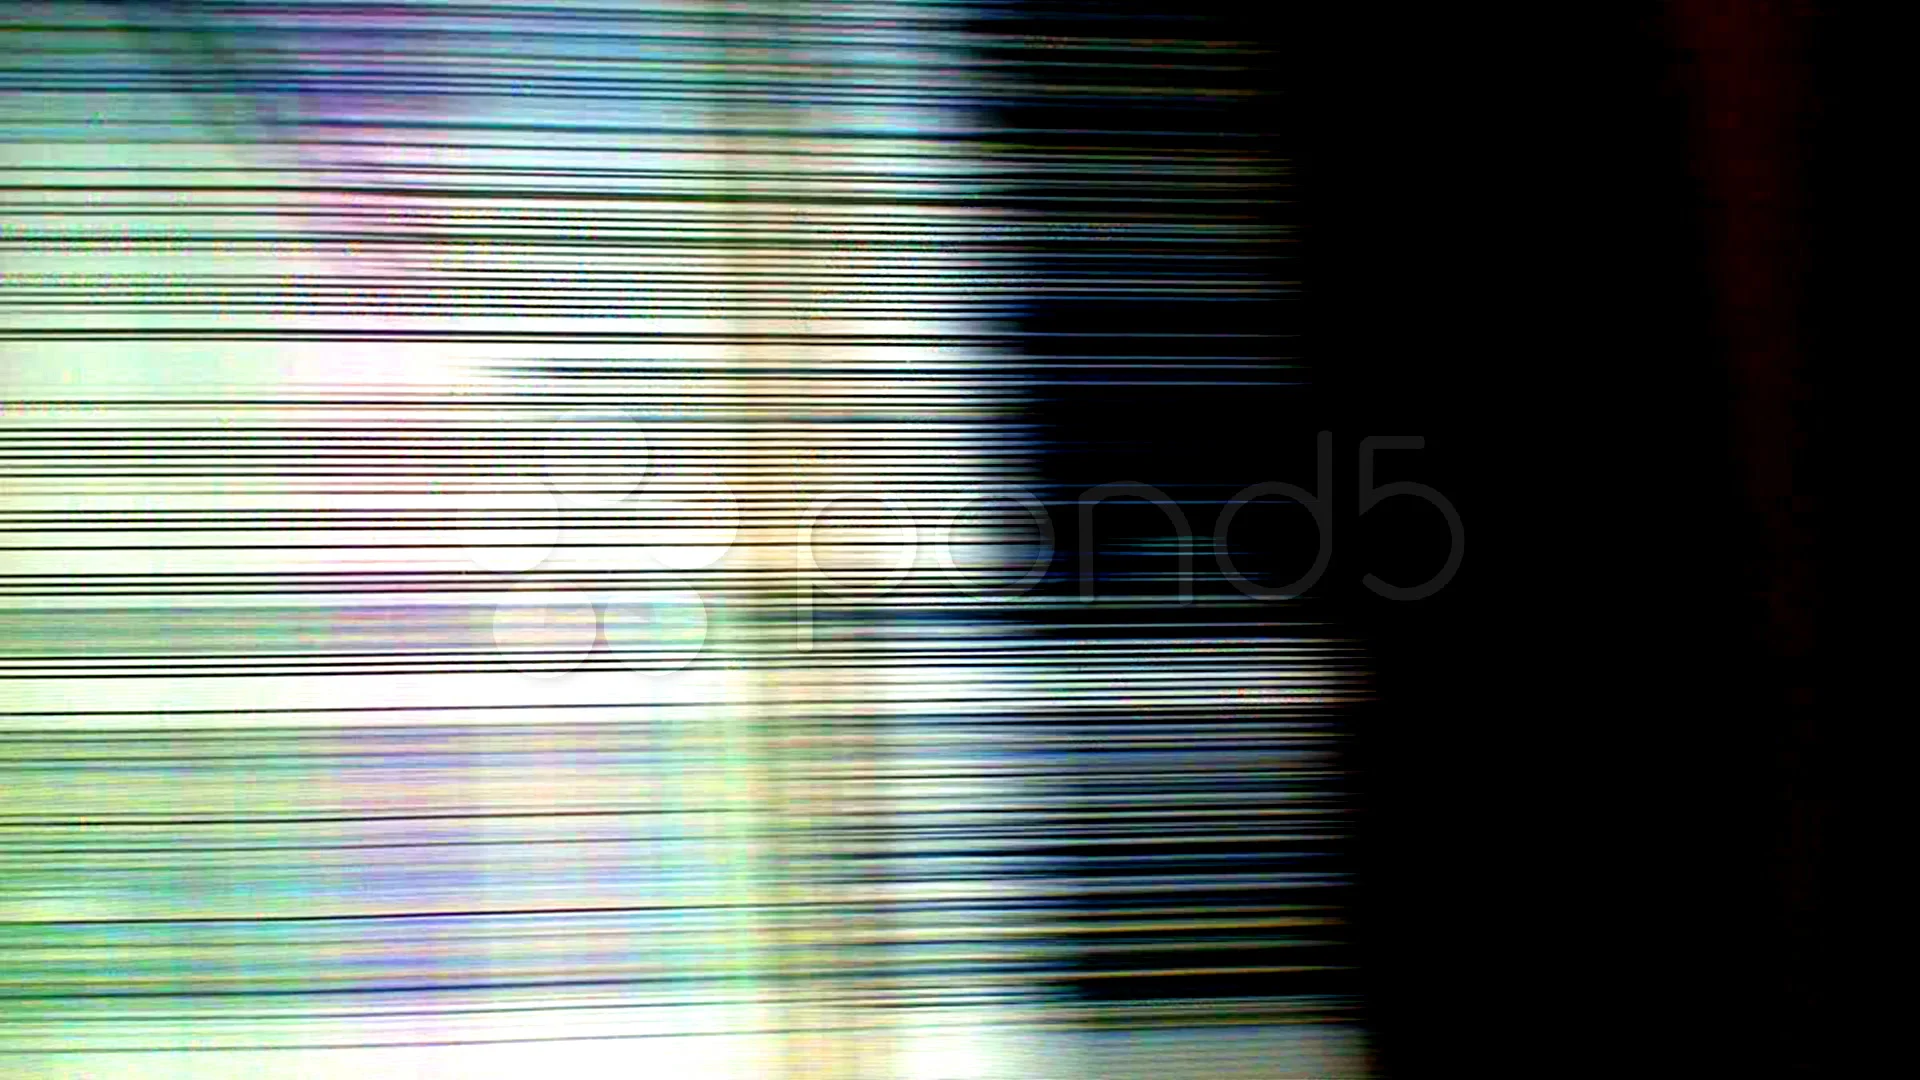 cracked lcd screen wallpaper 1080p